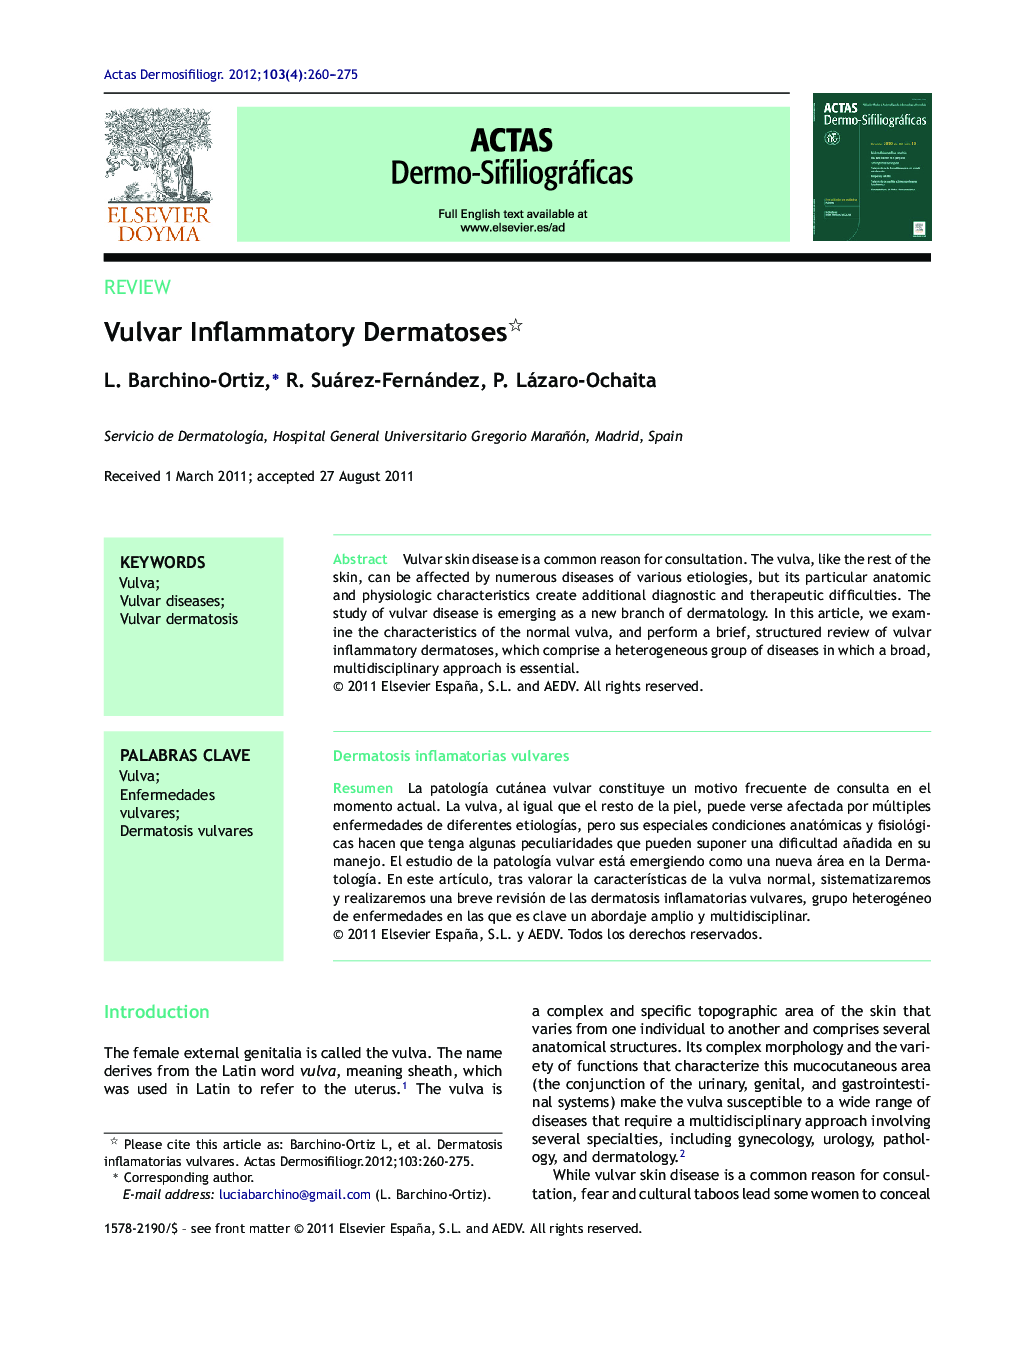 Vulvar Inflammatory Dermatoses 